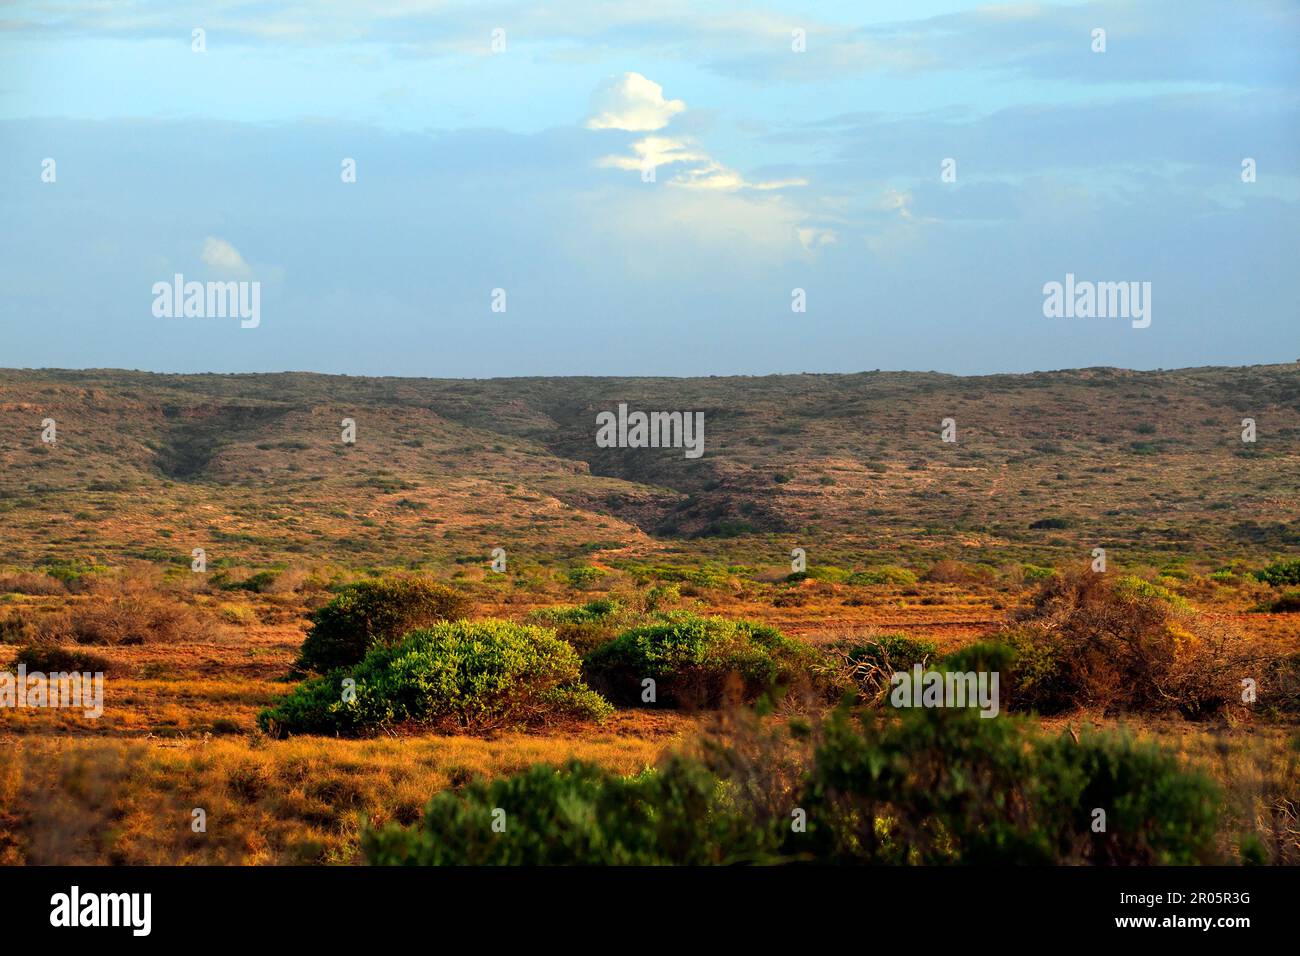 Savannah paesaggio, Cape Range National Park, nord-ovest Australia Foto Stock